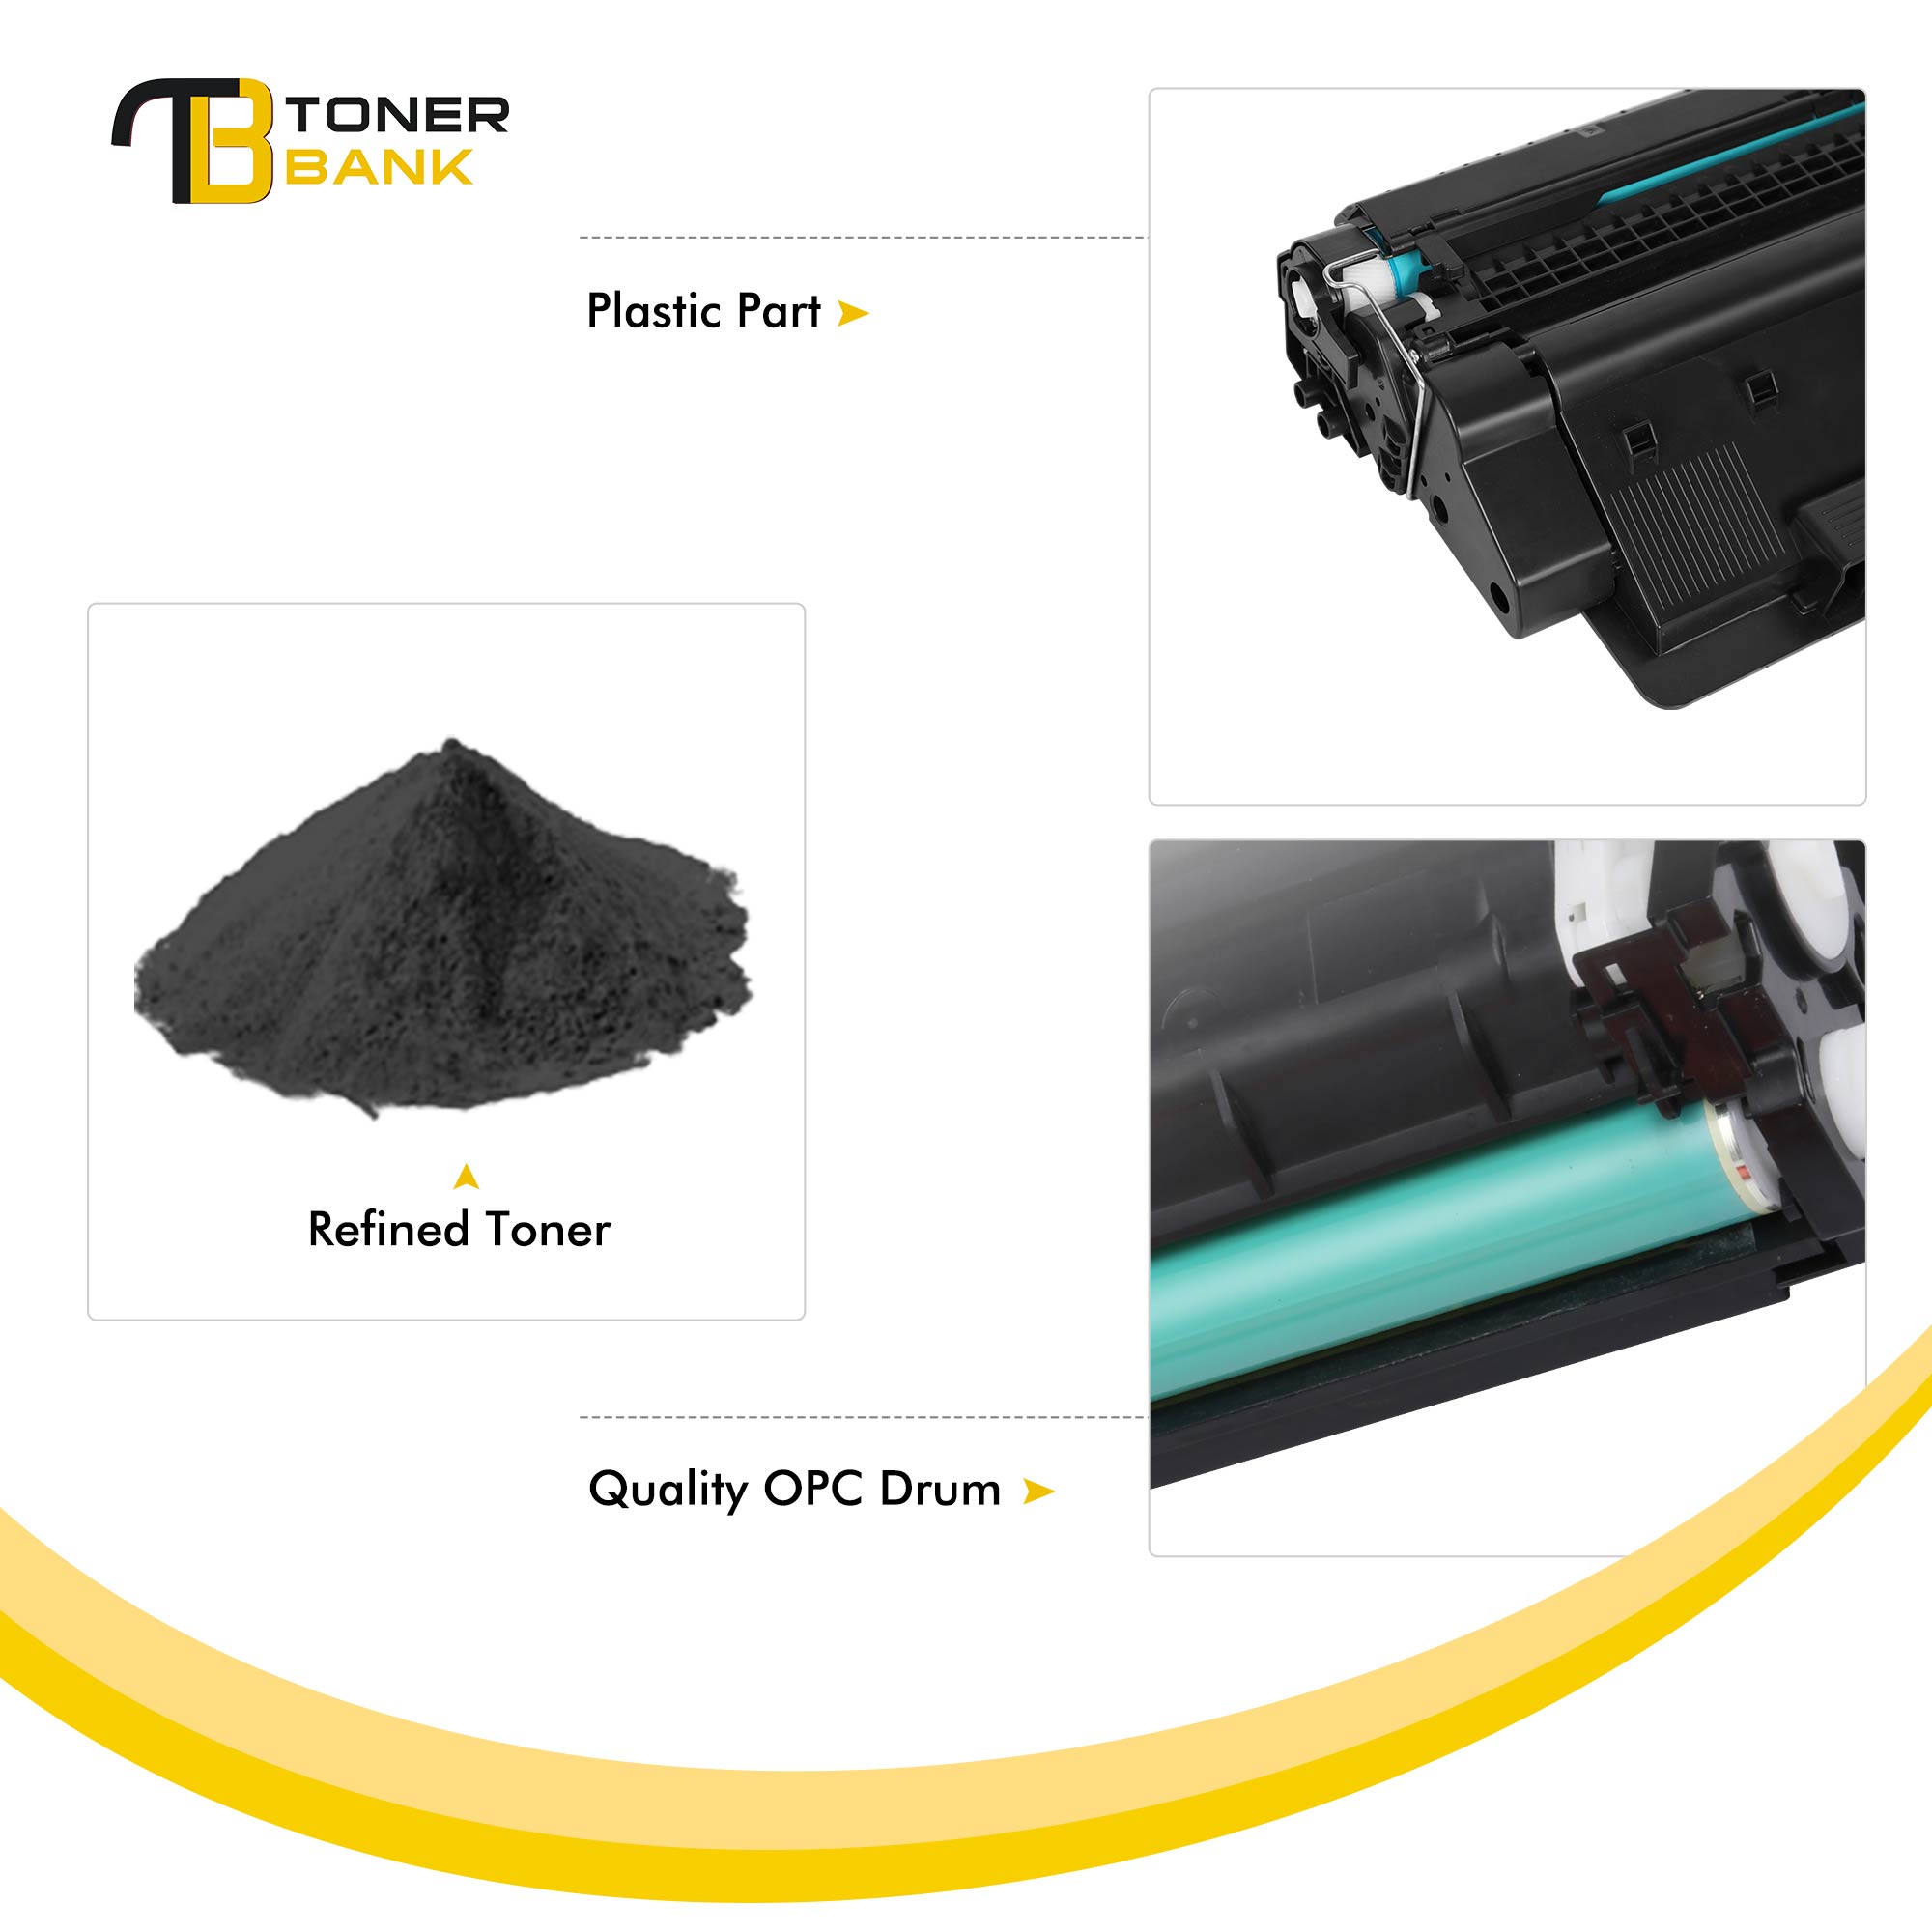 Toner Bank 4-Pack Compatible Toner Replacement Cartridge for HP CF214X LaserJet Enterprise MFP-M725dn M725f M725z+ M712n M712dn M712xh Printer Ink Black - image 3 of 7